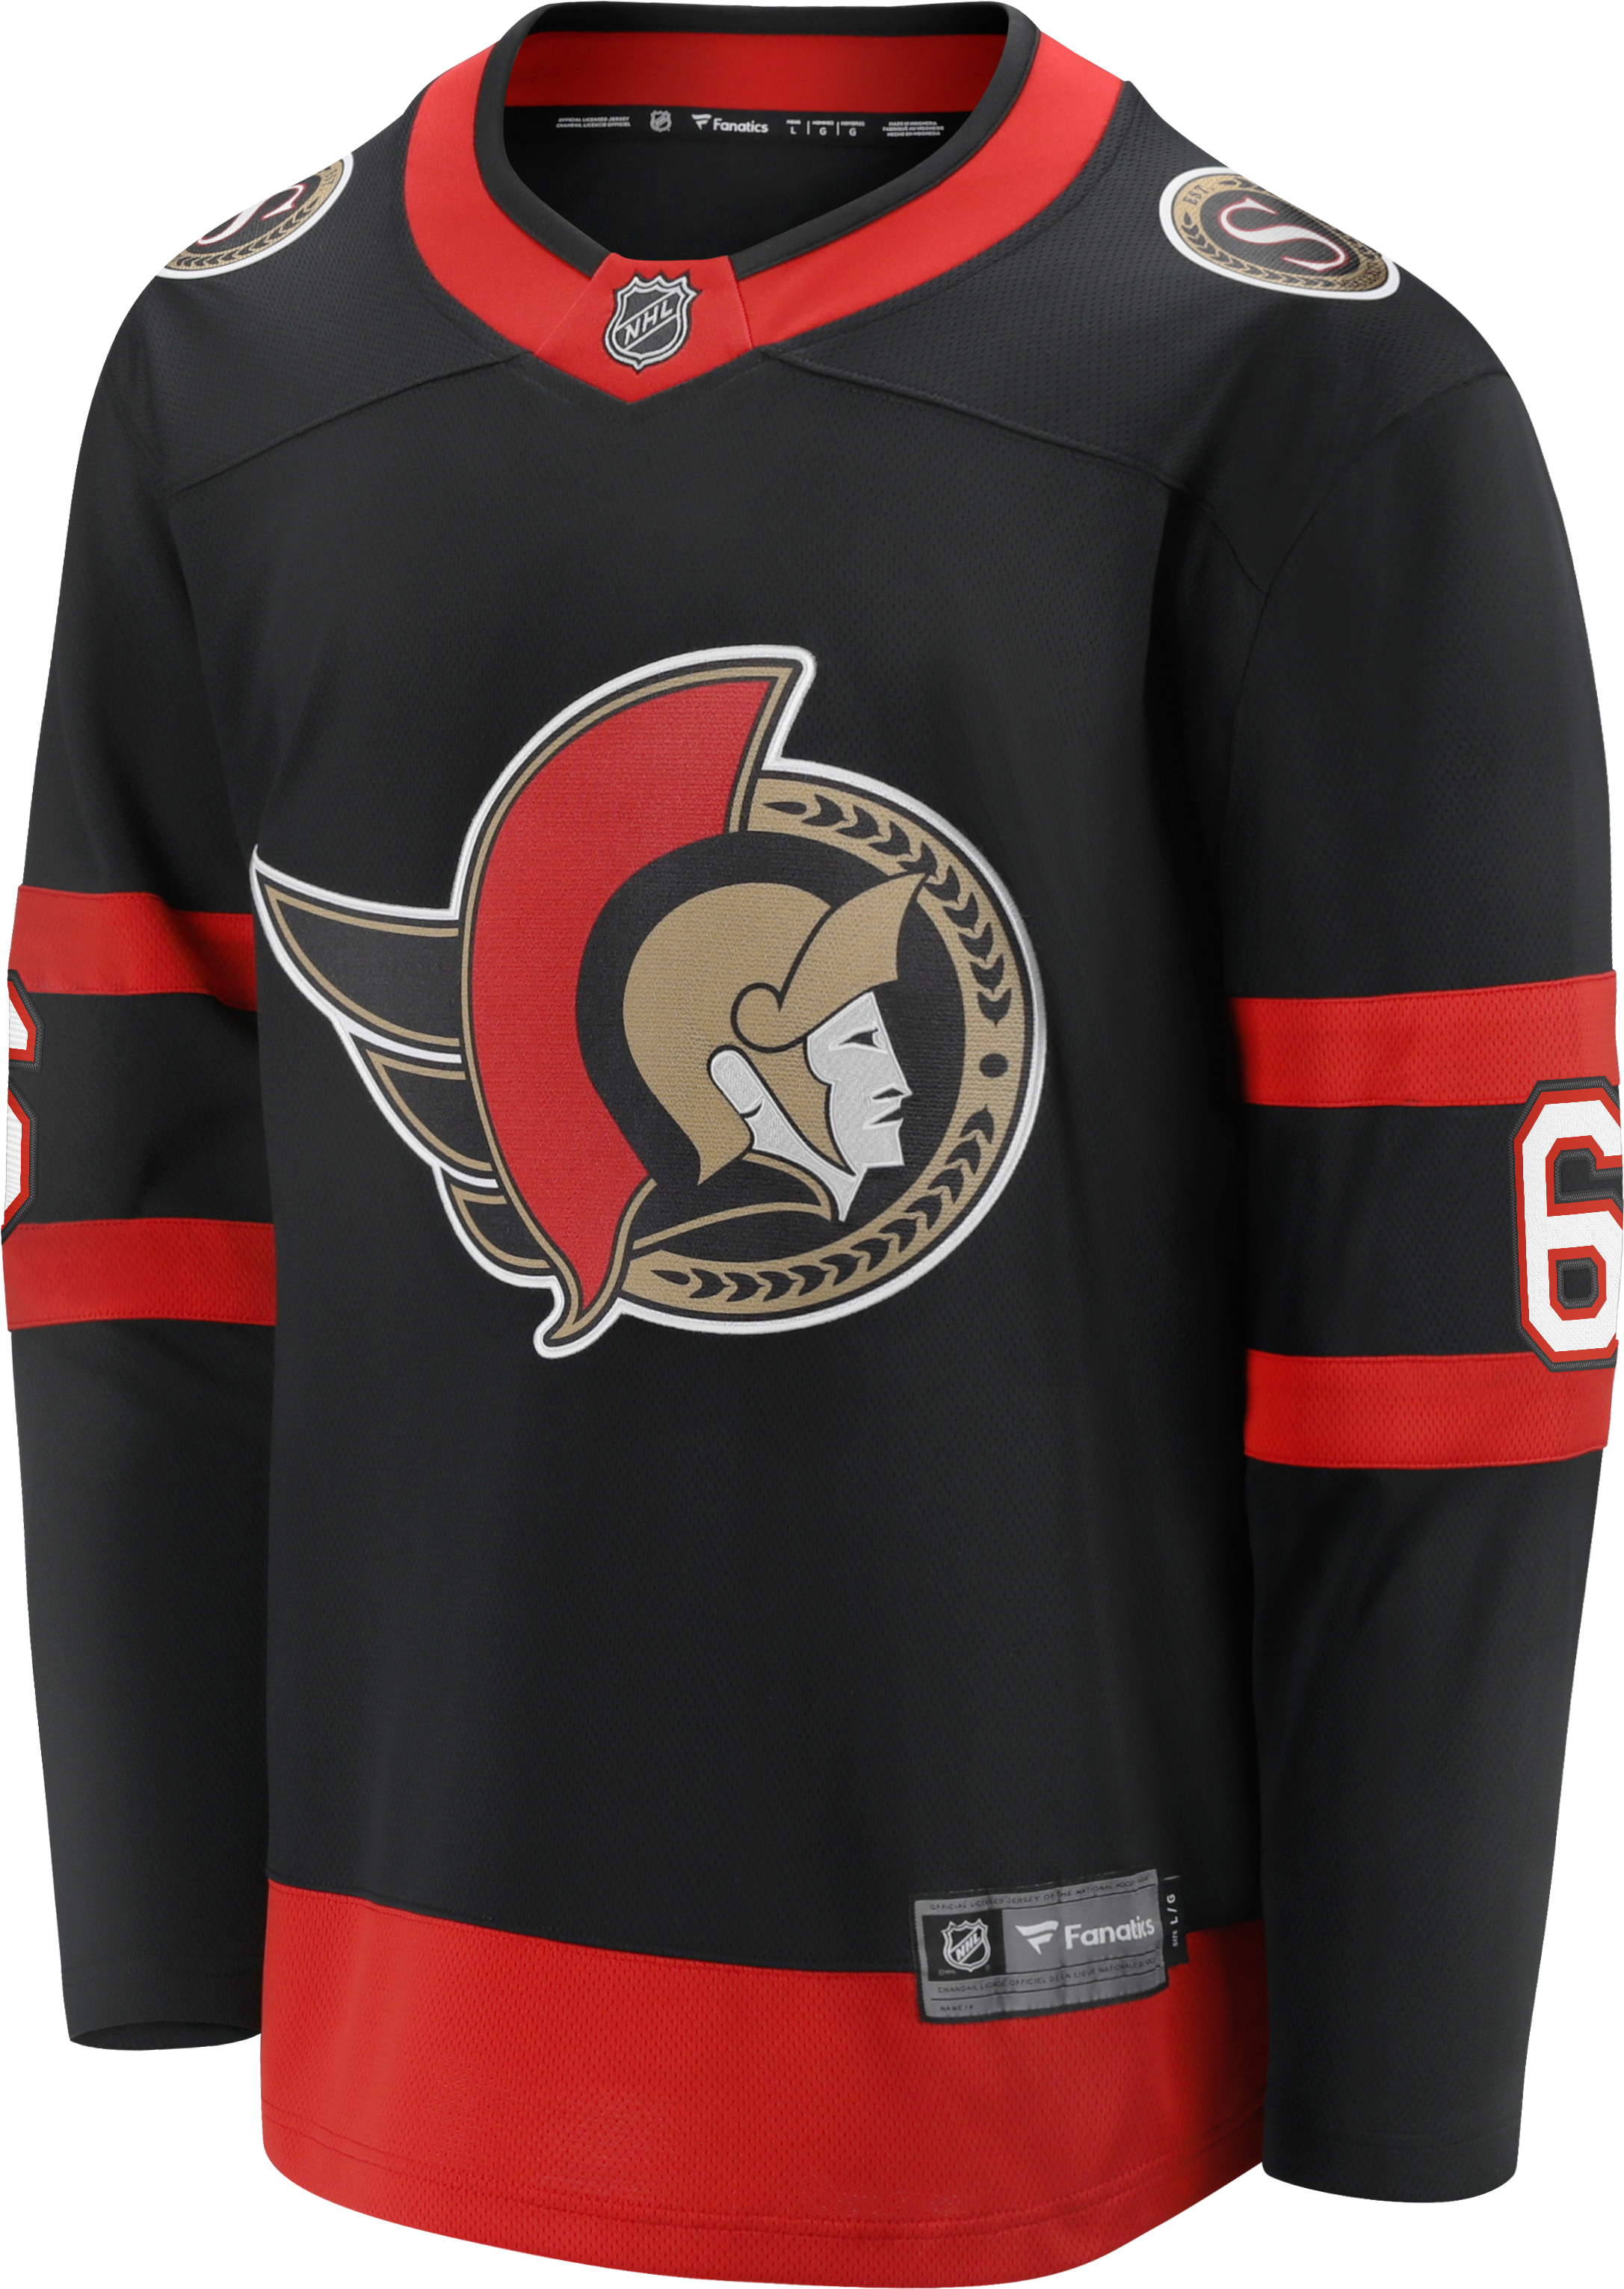 Ottawa Senators Reebok CCM Hockey Jersey Size Large Red Home Kit NHL